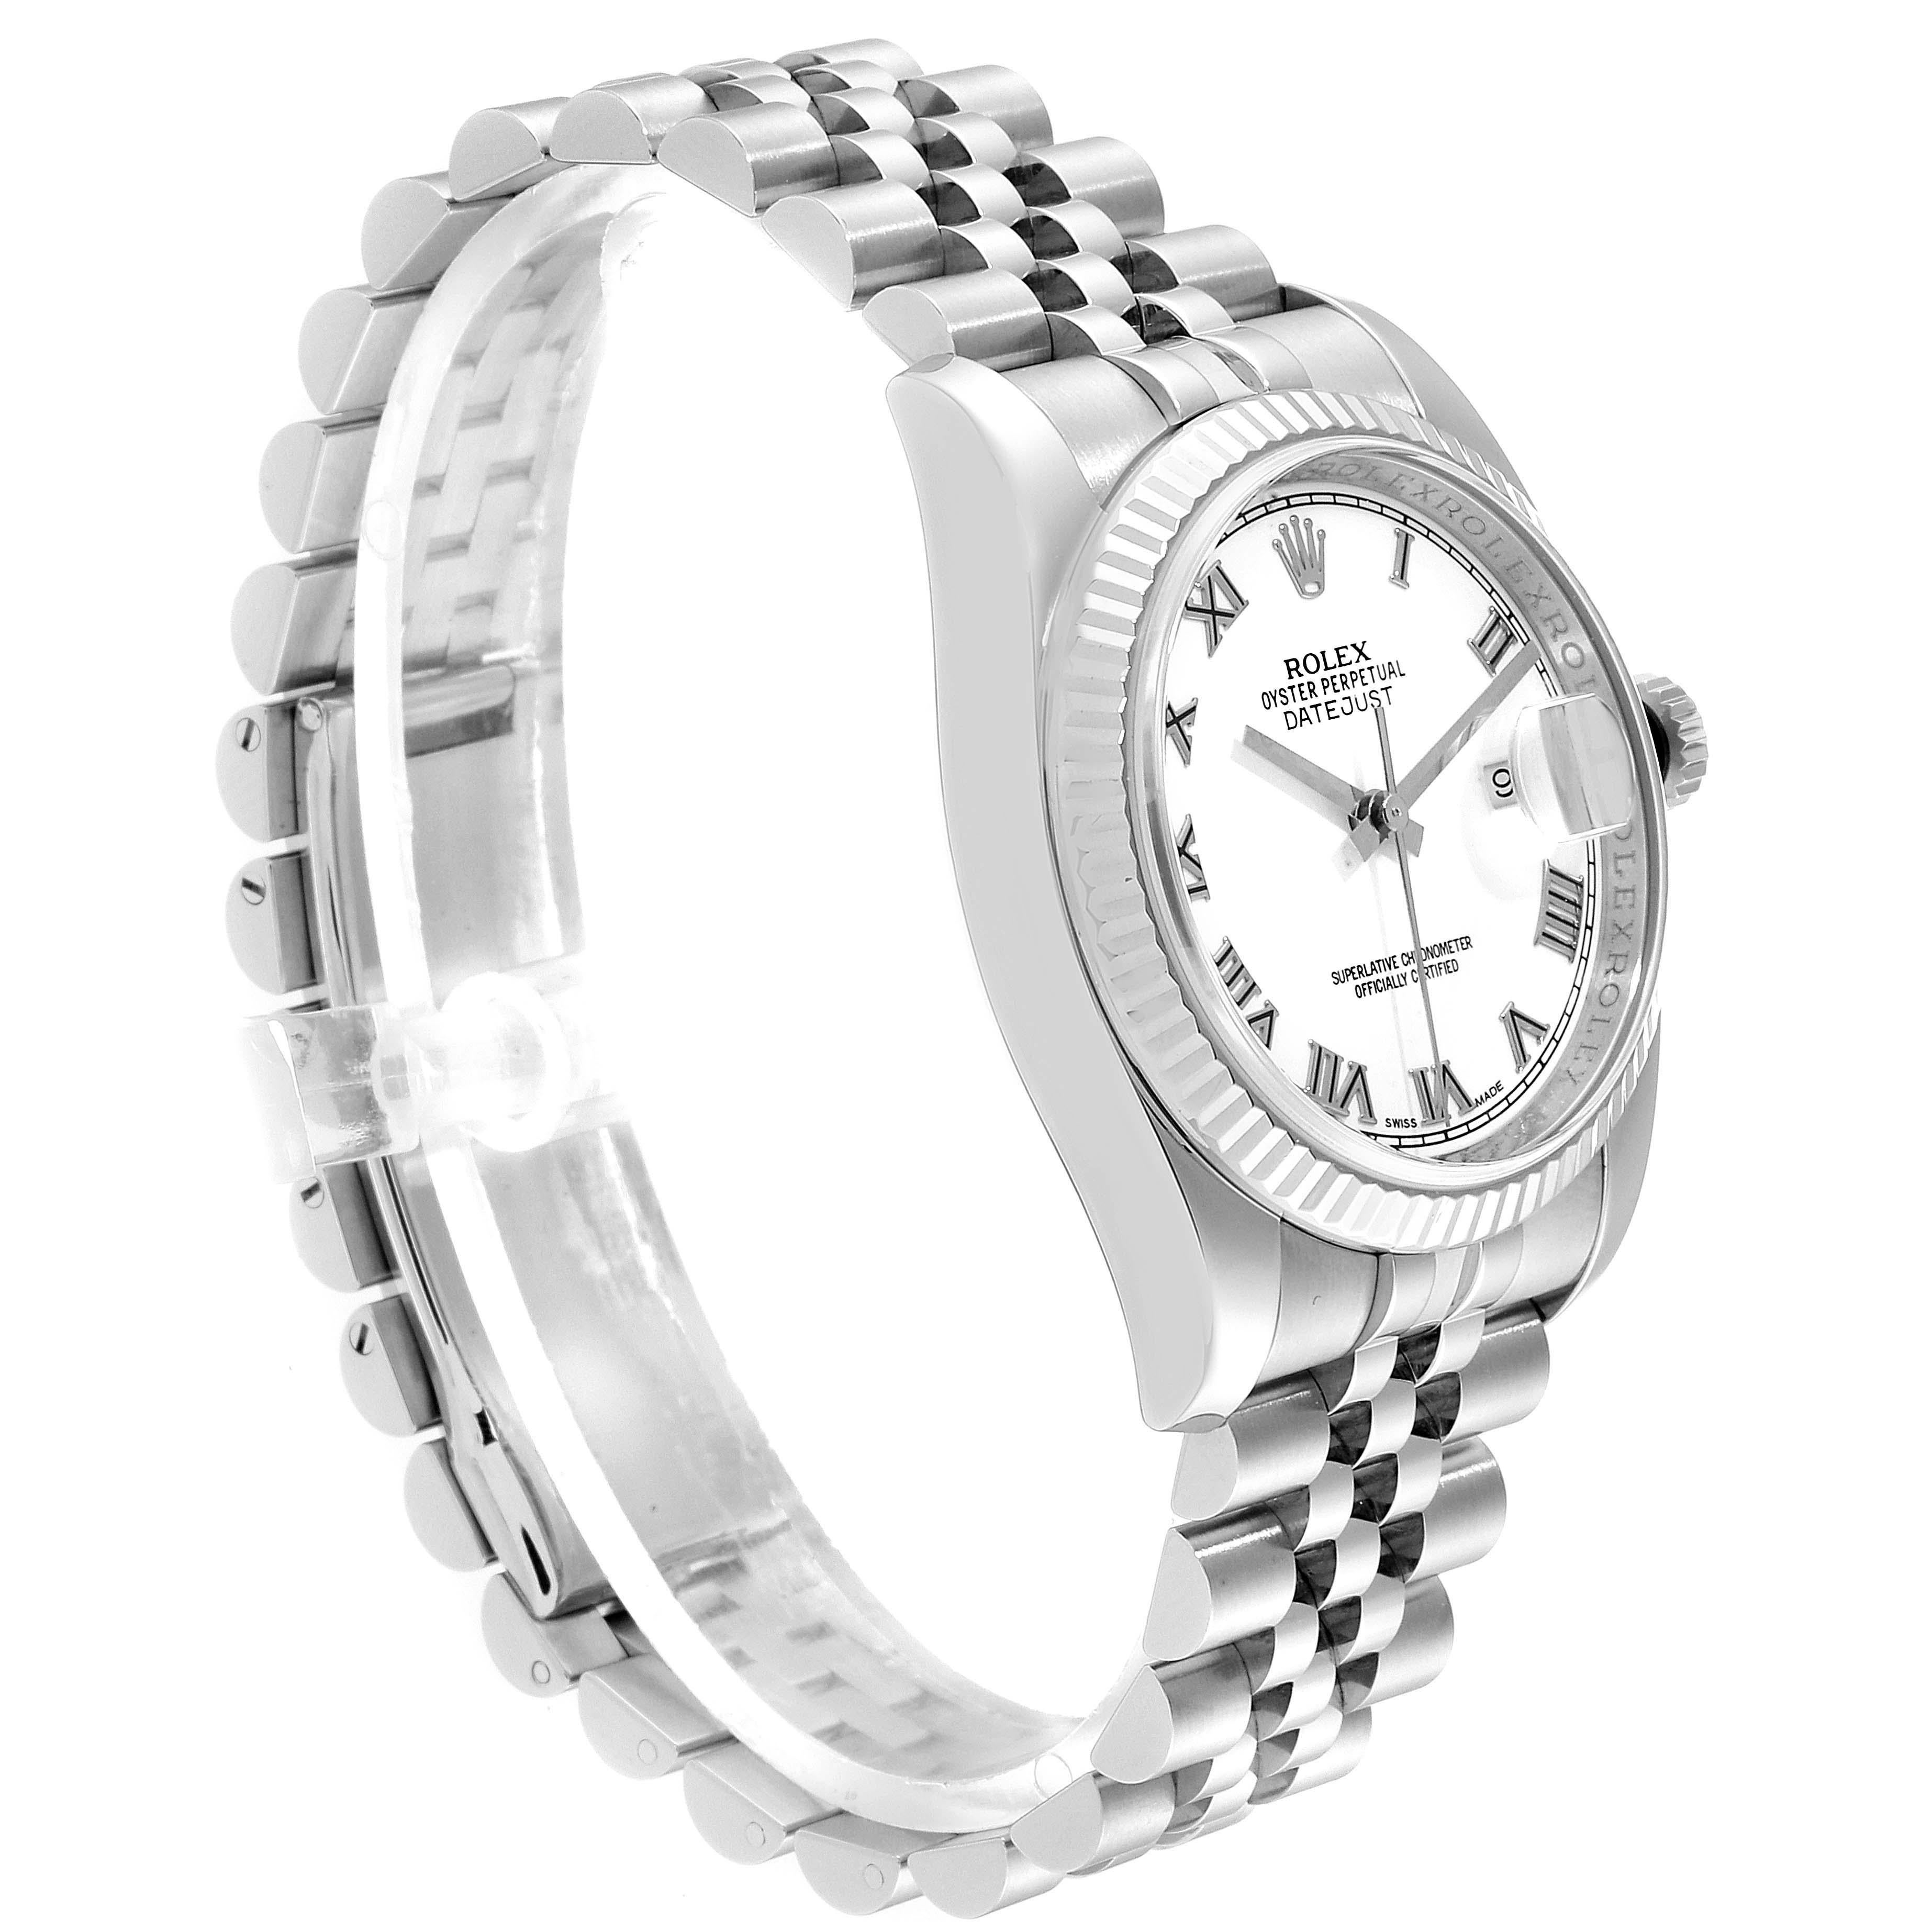 Rolex Datejust Steel White Gold Jubilee Bracelet Men's Watch 116234 In Excellent Condition For Sale In Atlanta, GA